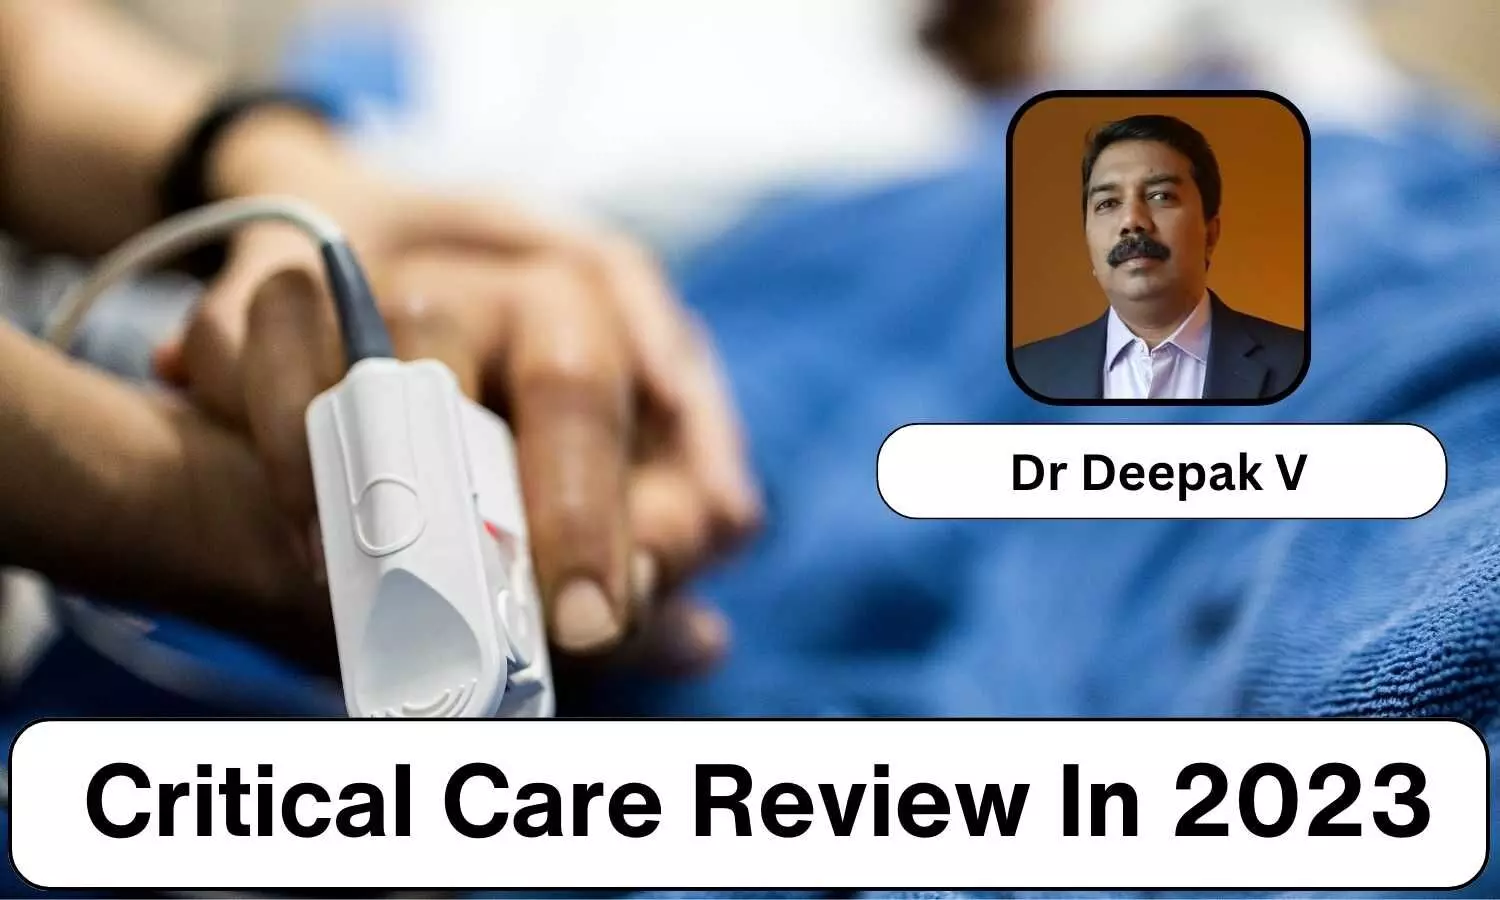 Critical Care Review In 2023: Notable Achievements And Advancements - Dr Deepak V